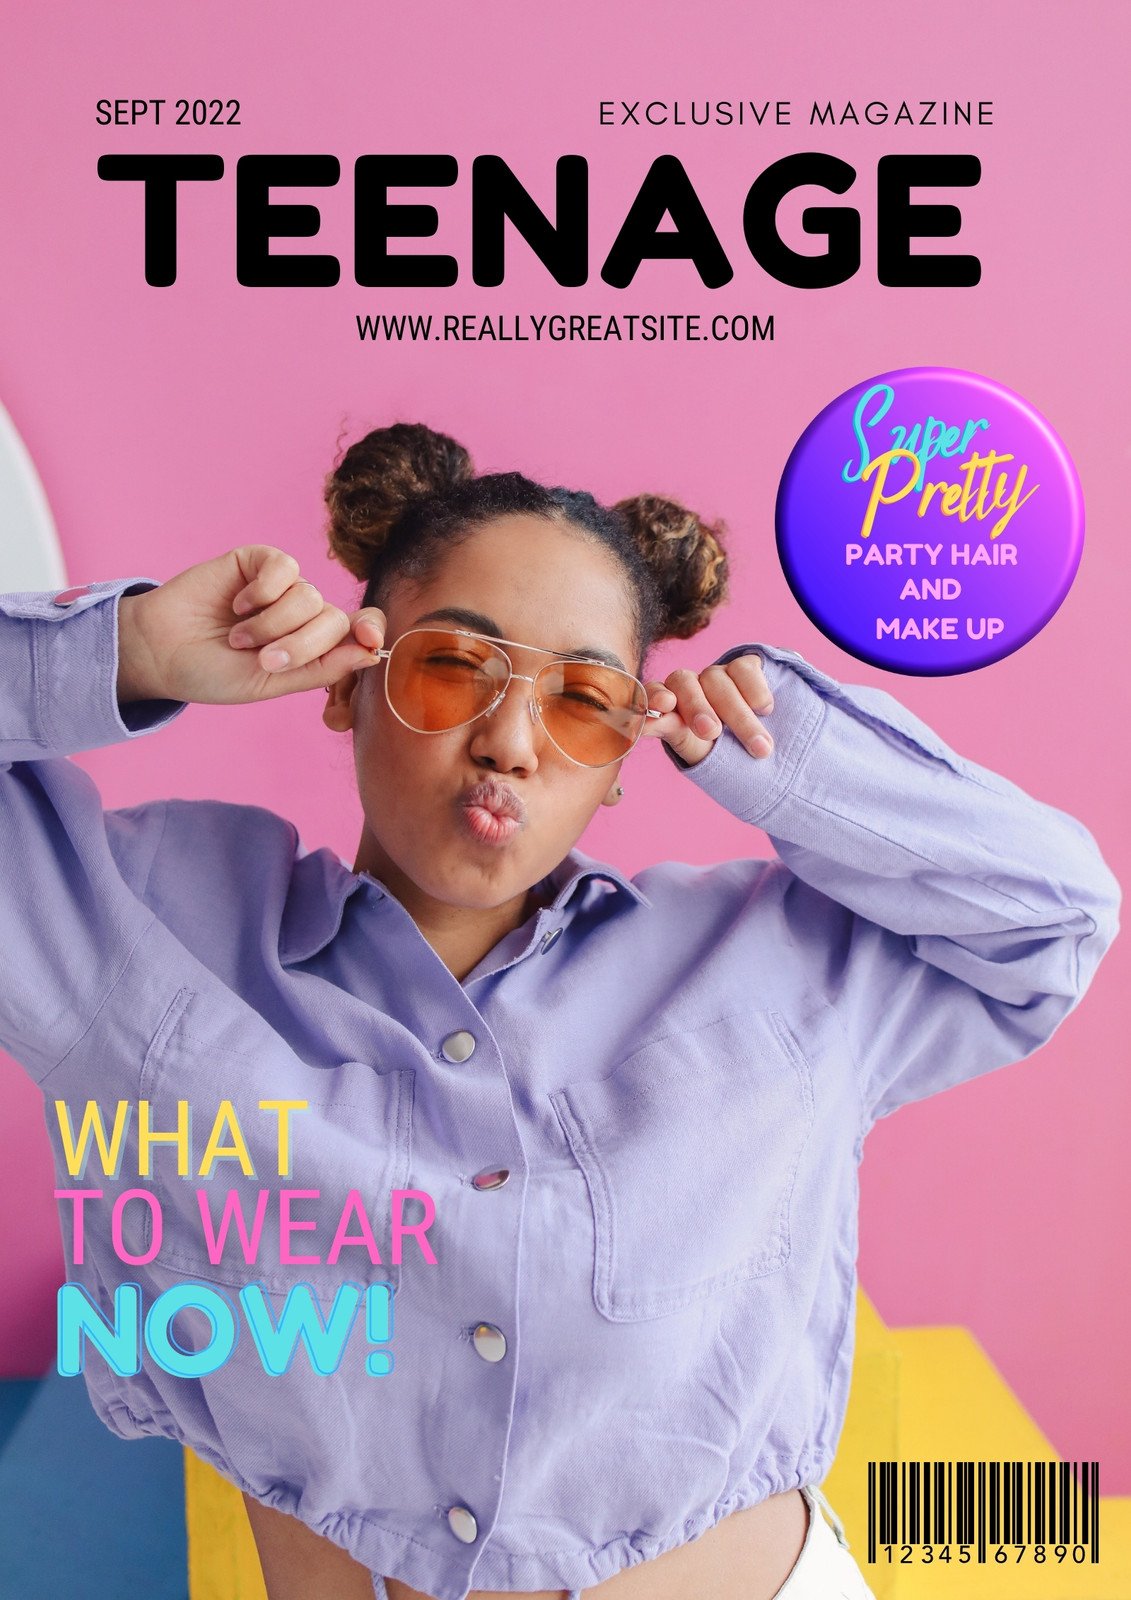 Free, customizable teen magazine cover templates | Canva